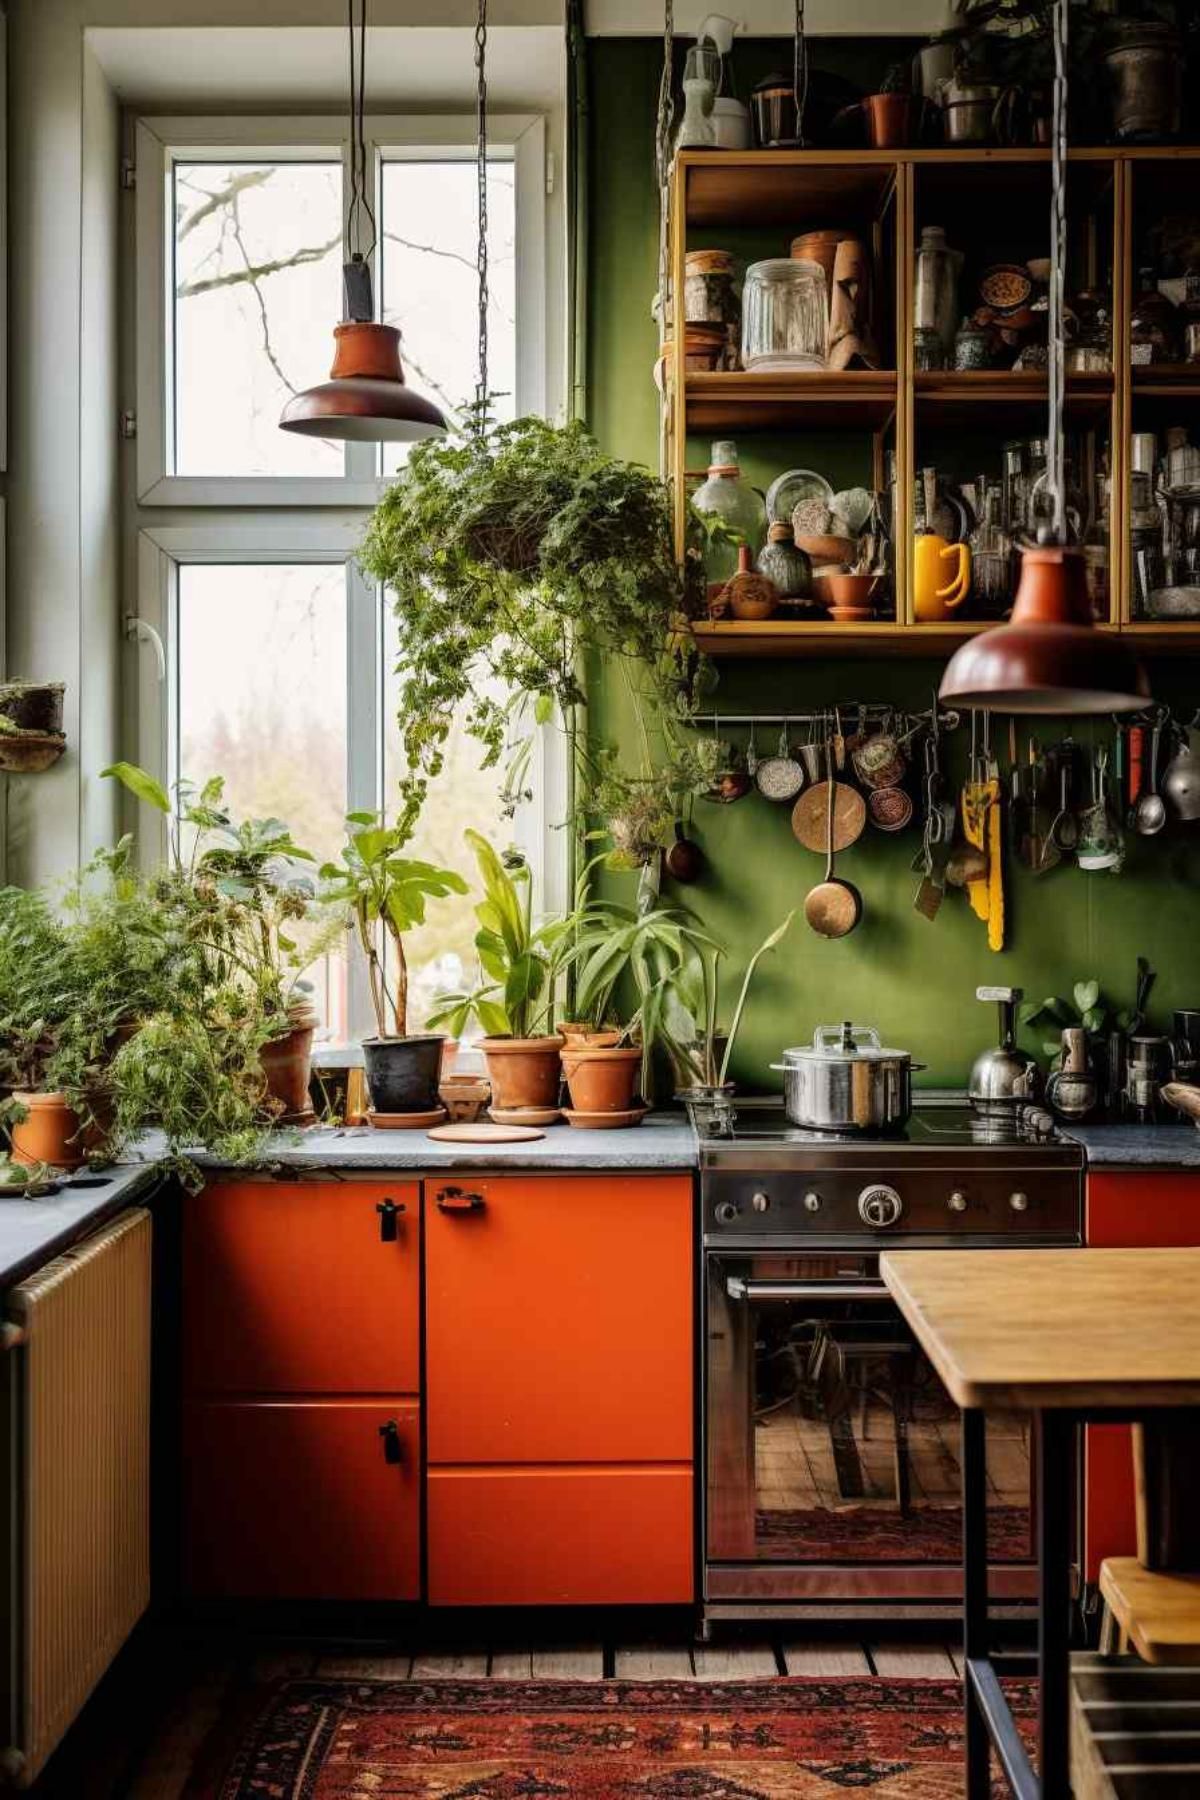 Rustic Bohemian Kitchen Decorations Stylish Kitchen Decor Ideas with a Bohemian Twist